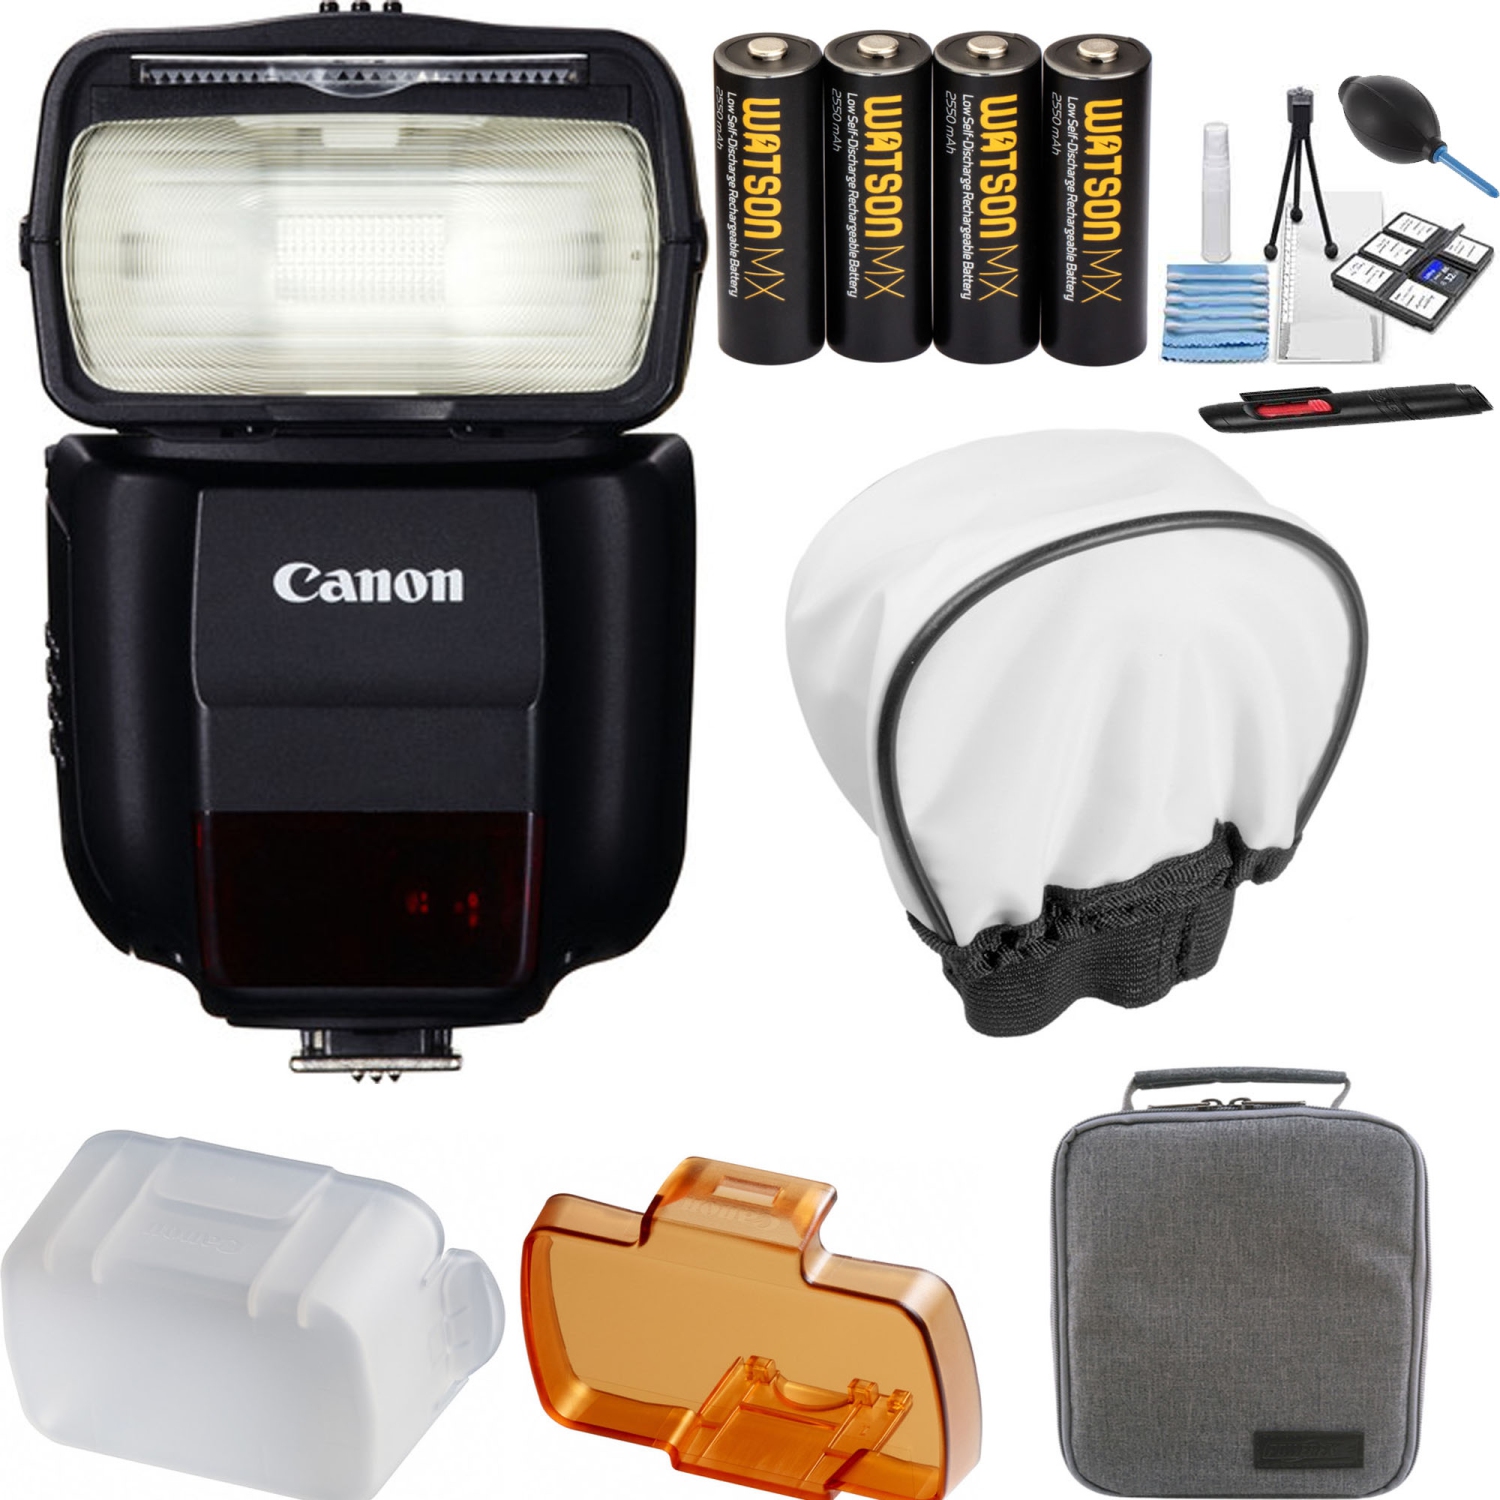 Canon Speedlite 430EX III-RT Essential Photo Kit - US Version w/ Seller Warranty